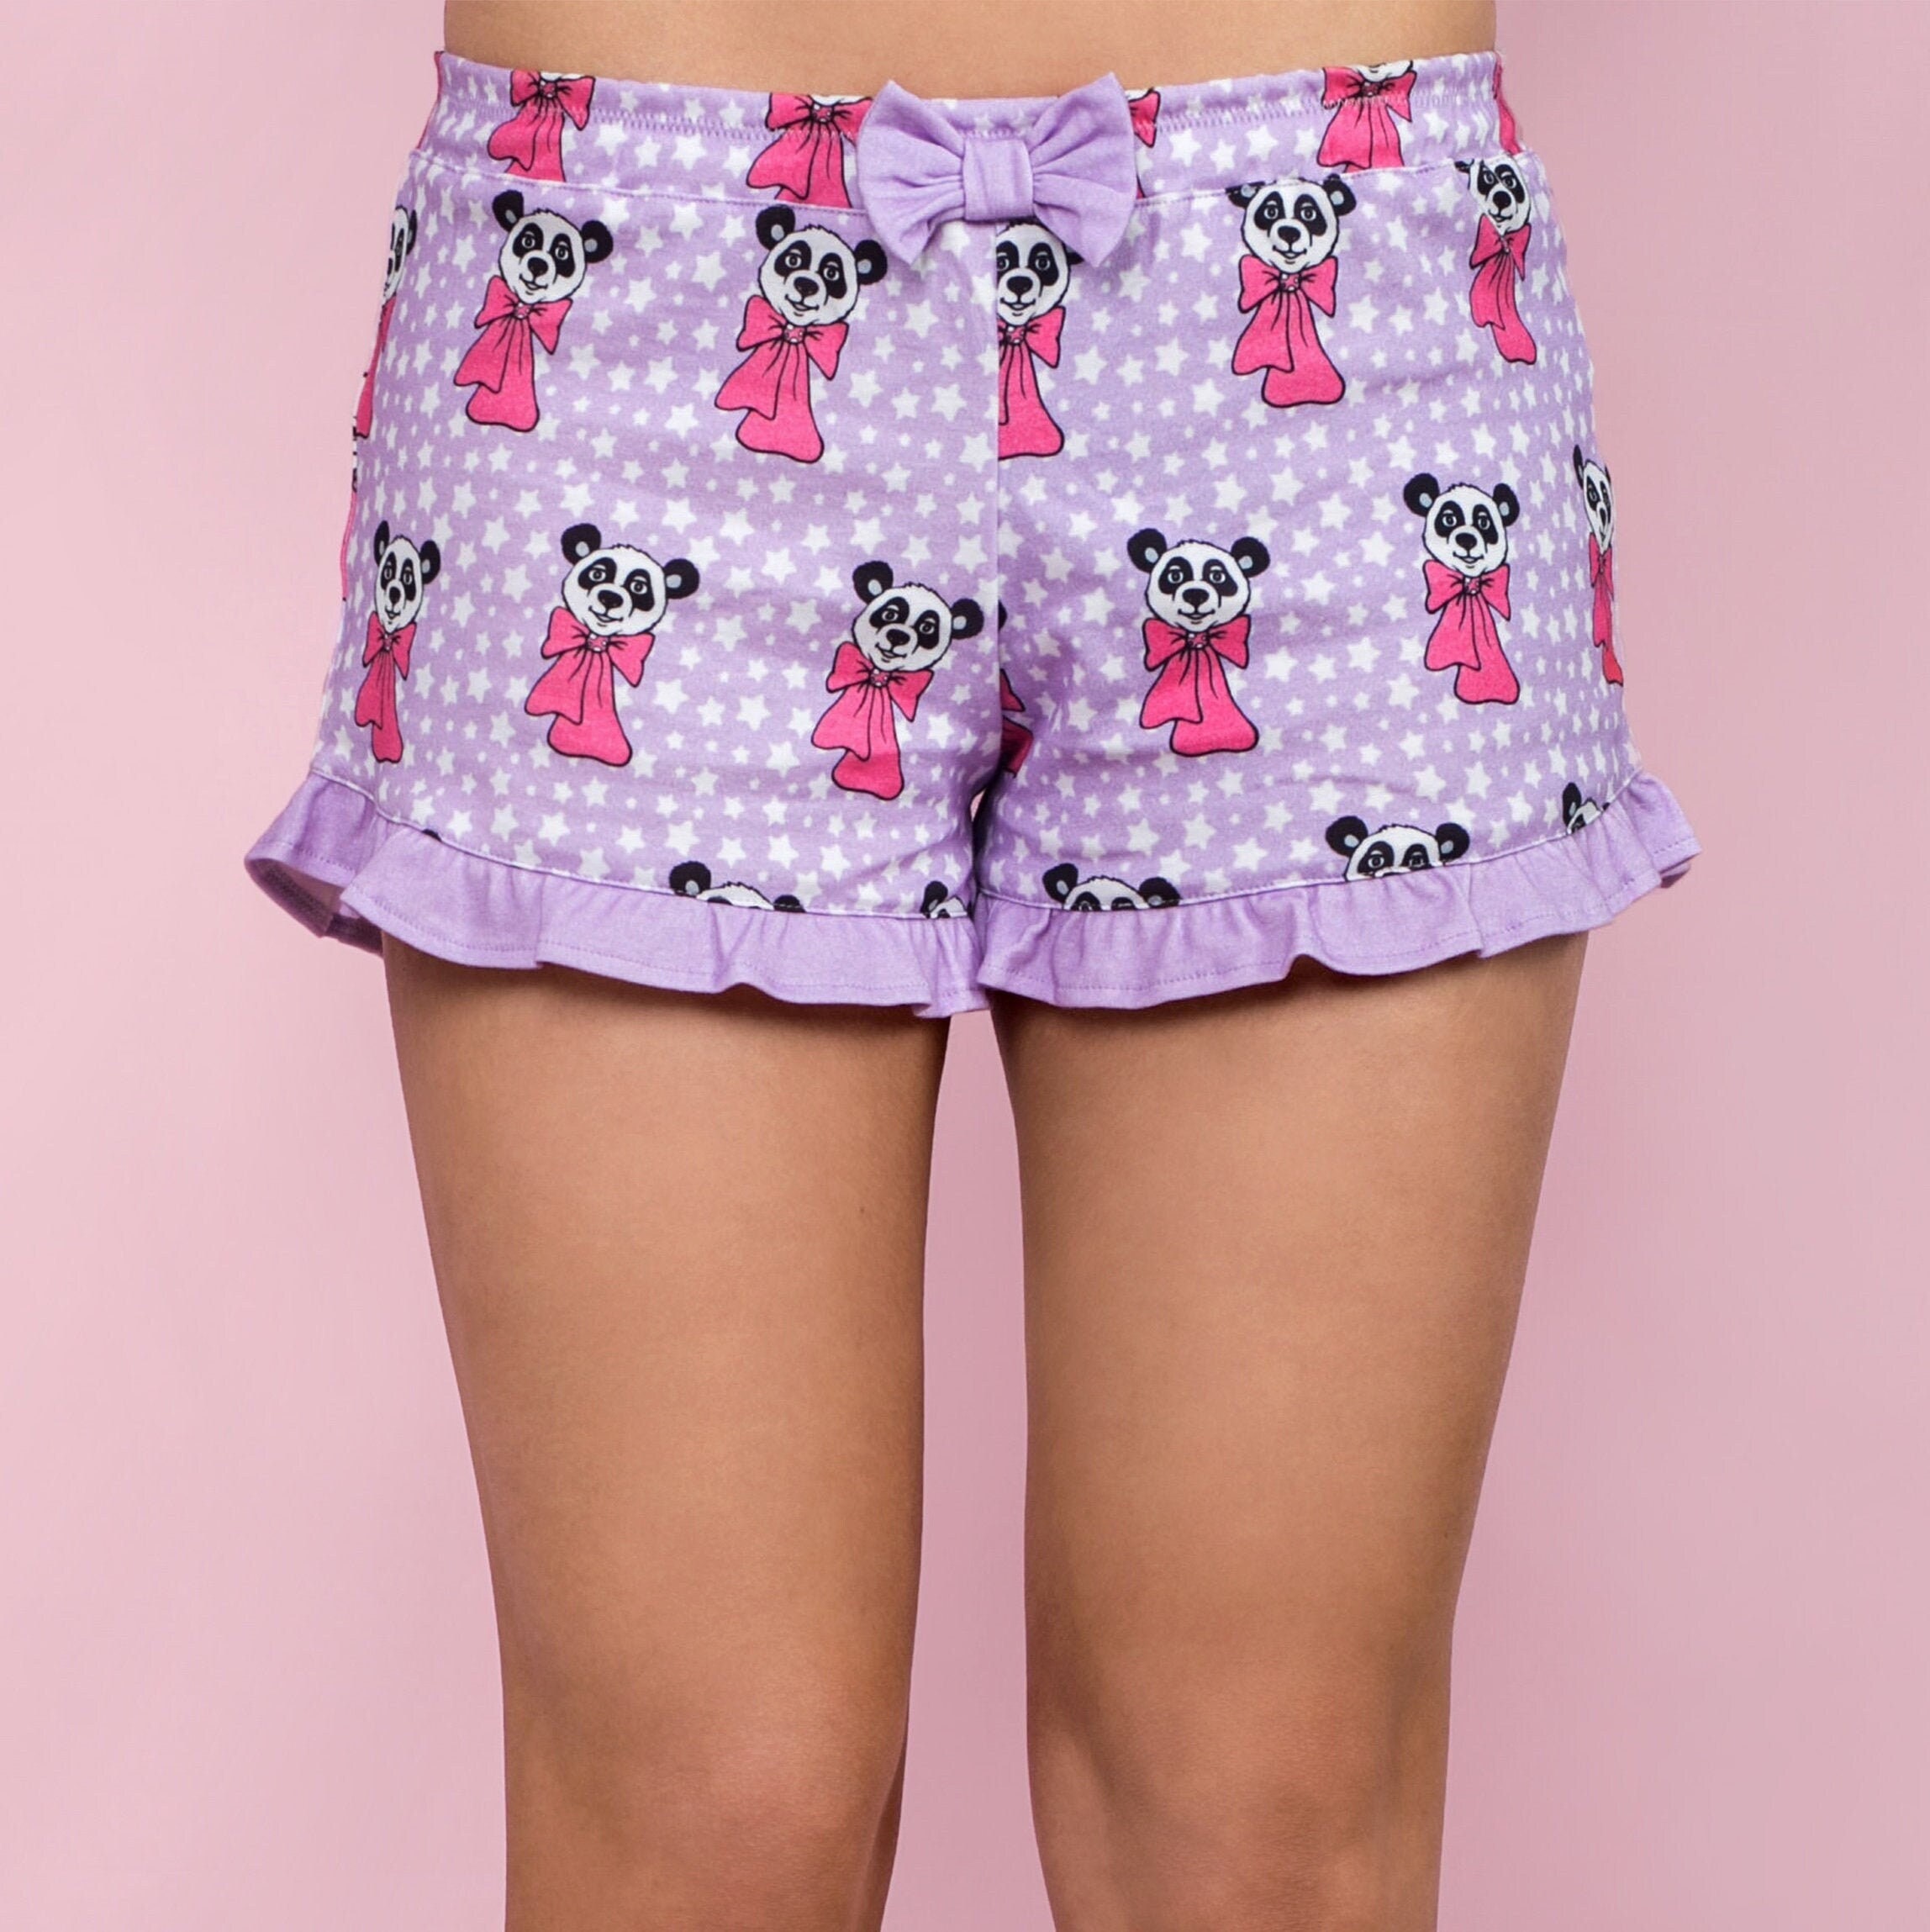 Panda Pyjama Shorts, Loungewear Bottoms, Pj\'s, Panda Sleepwear, Women\'s  Sleepwear, Cotton Pyjamas, Women\'s Pajama Shorts, Cute Gift for Her - Etsy